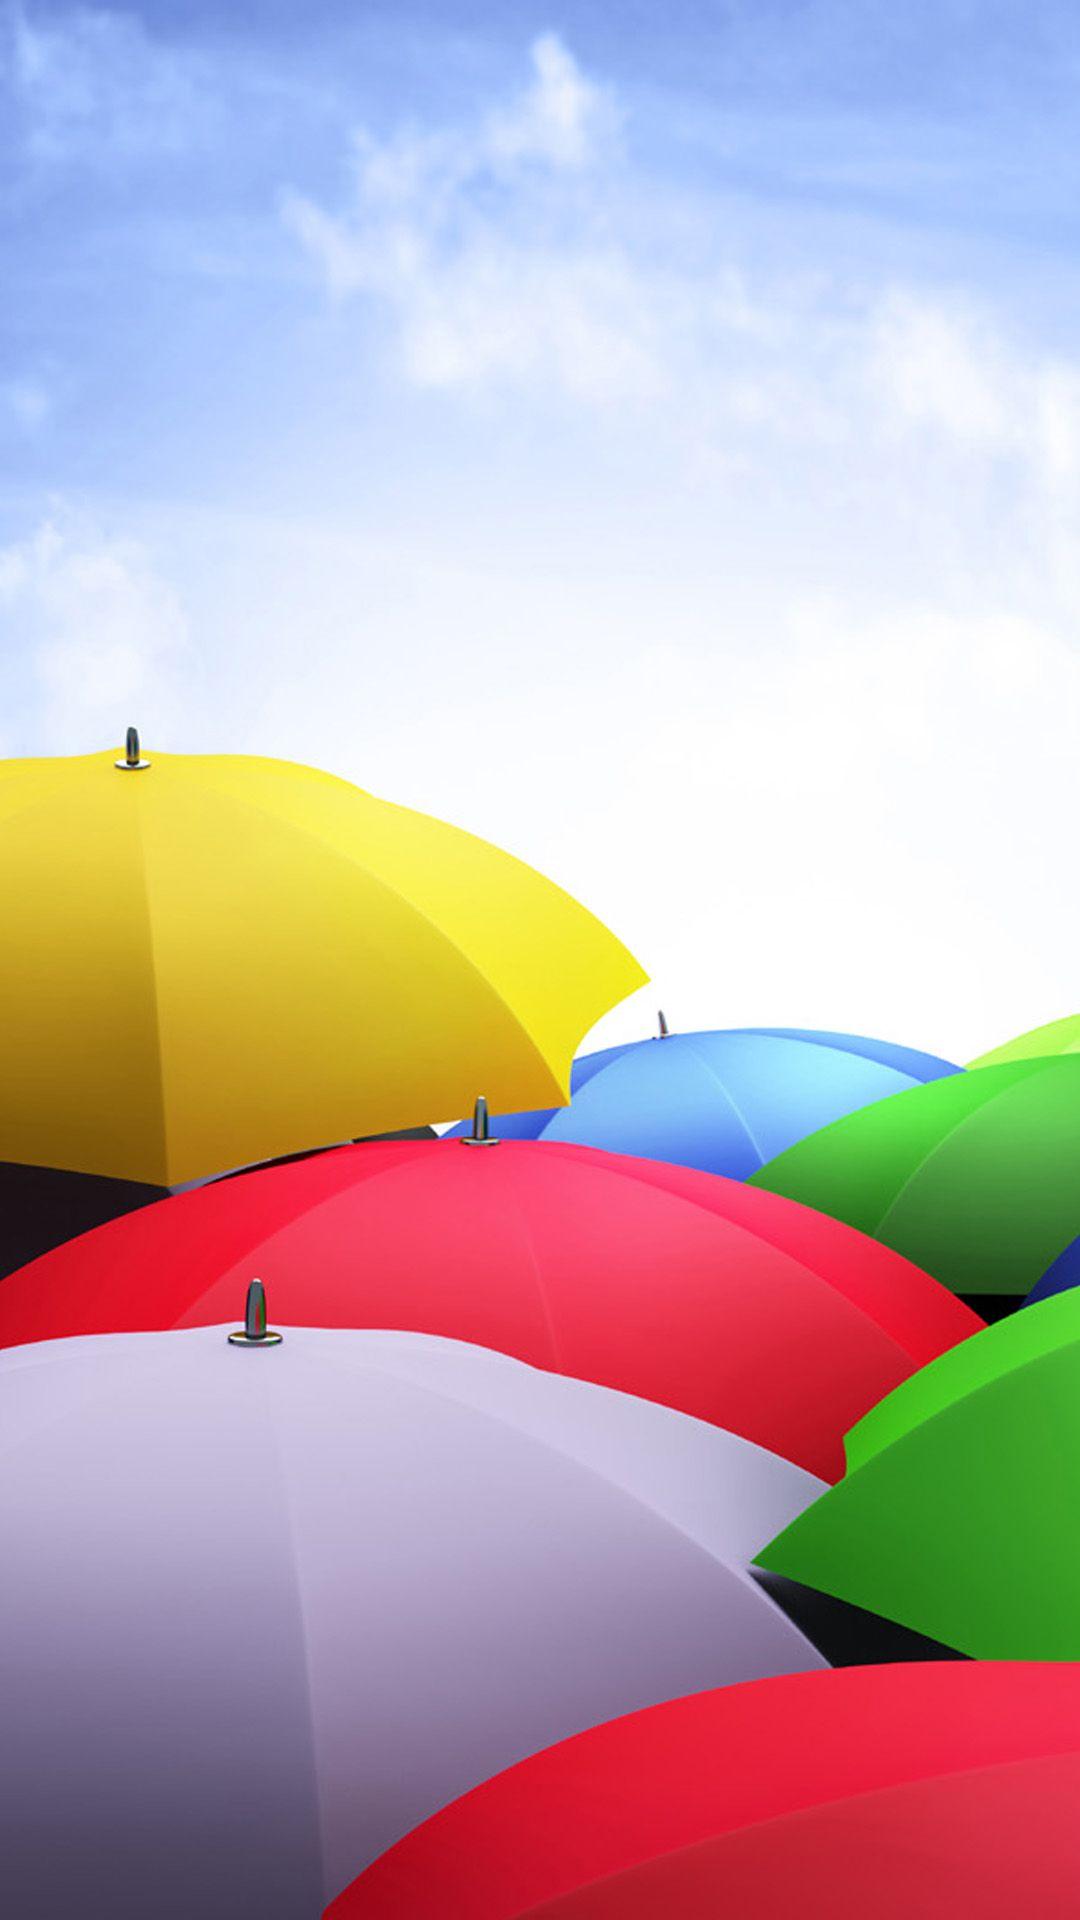 Nexus 5 Stock Colorful Umbrellas Android Wallpaper free download